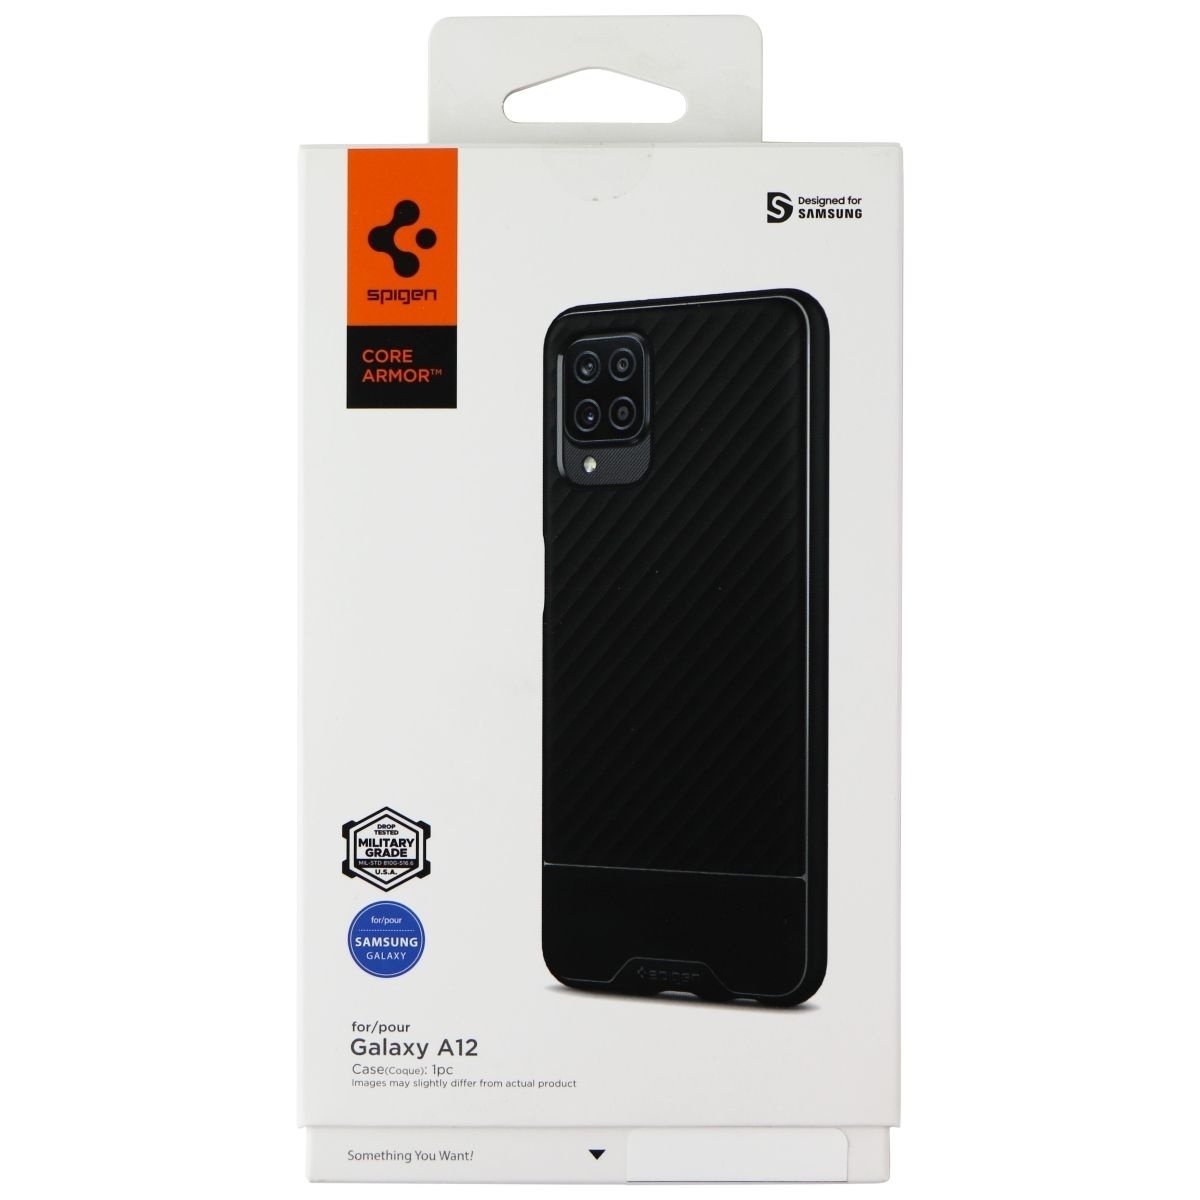 Spigen Core Armor Series Phone Case For Samsung Galaxy A12 - Black